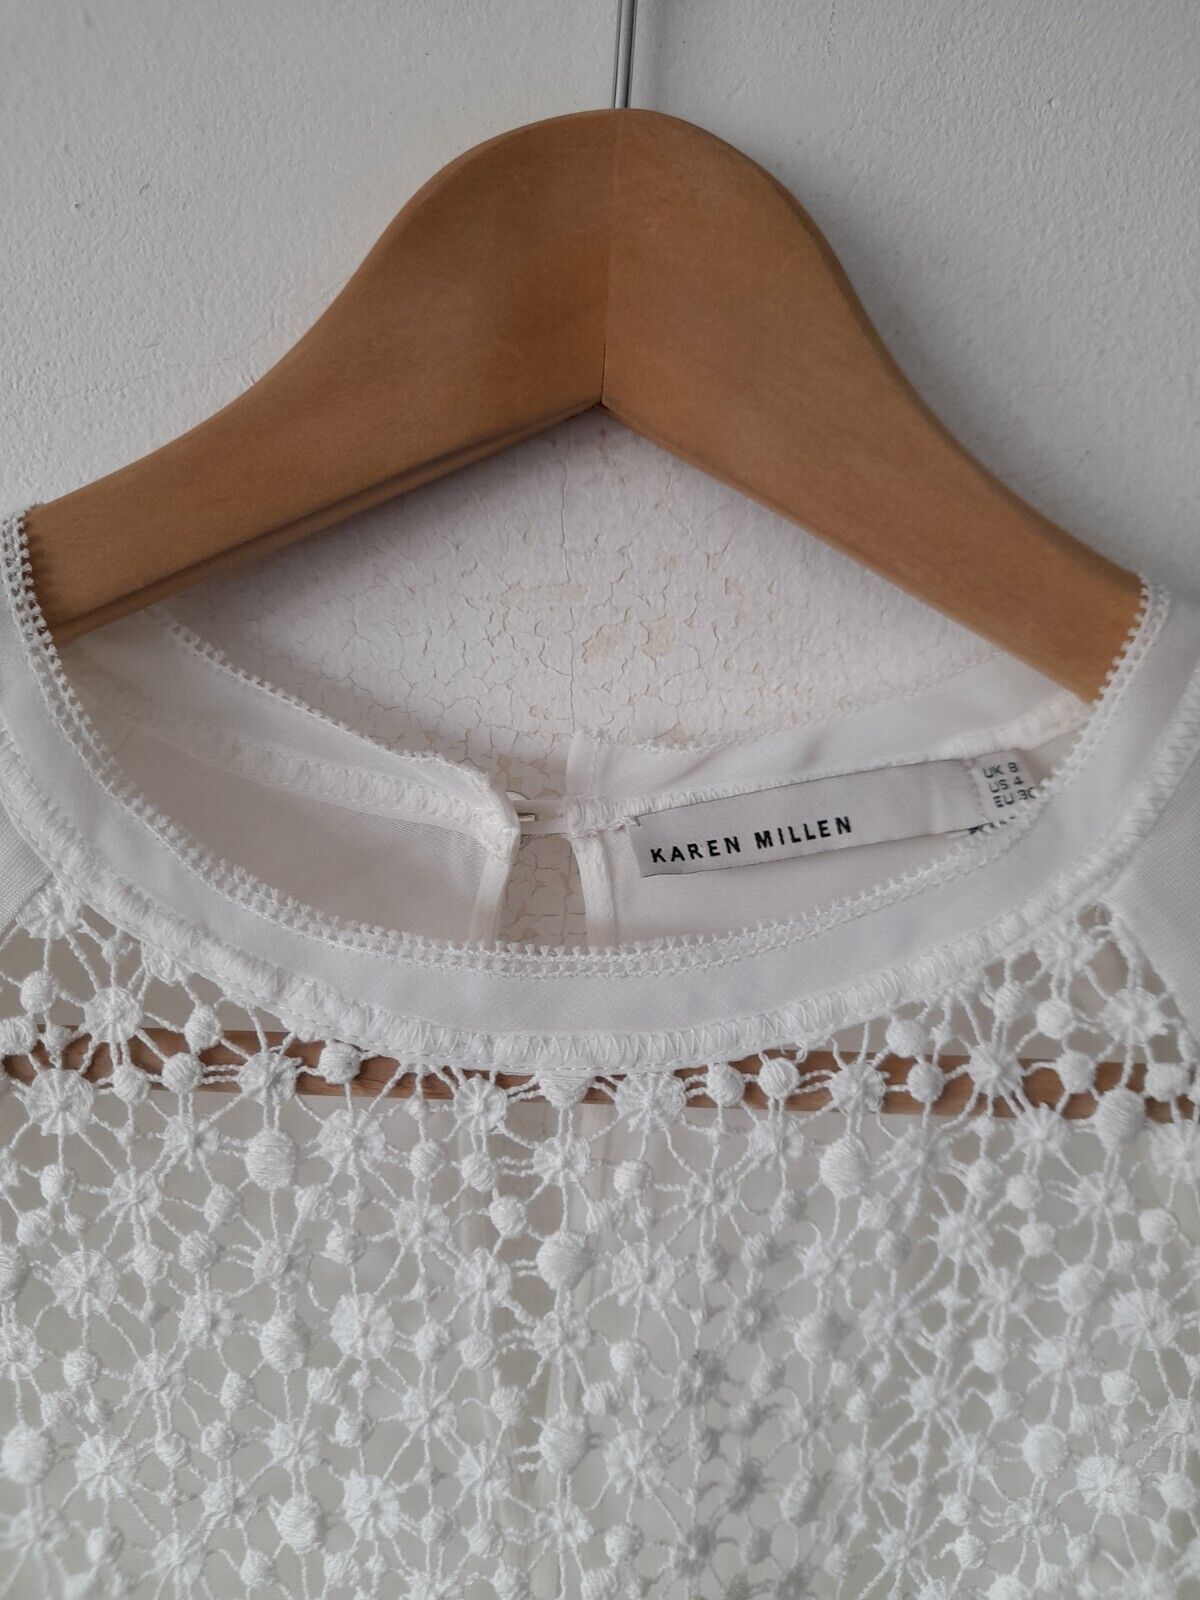 Karen Millen Ivory Crochet Top Size 8 Uk Lace Str… - image 3